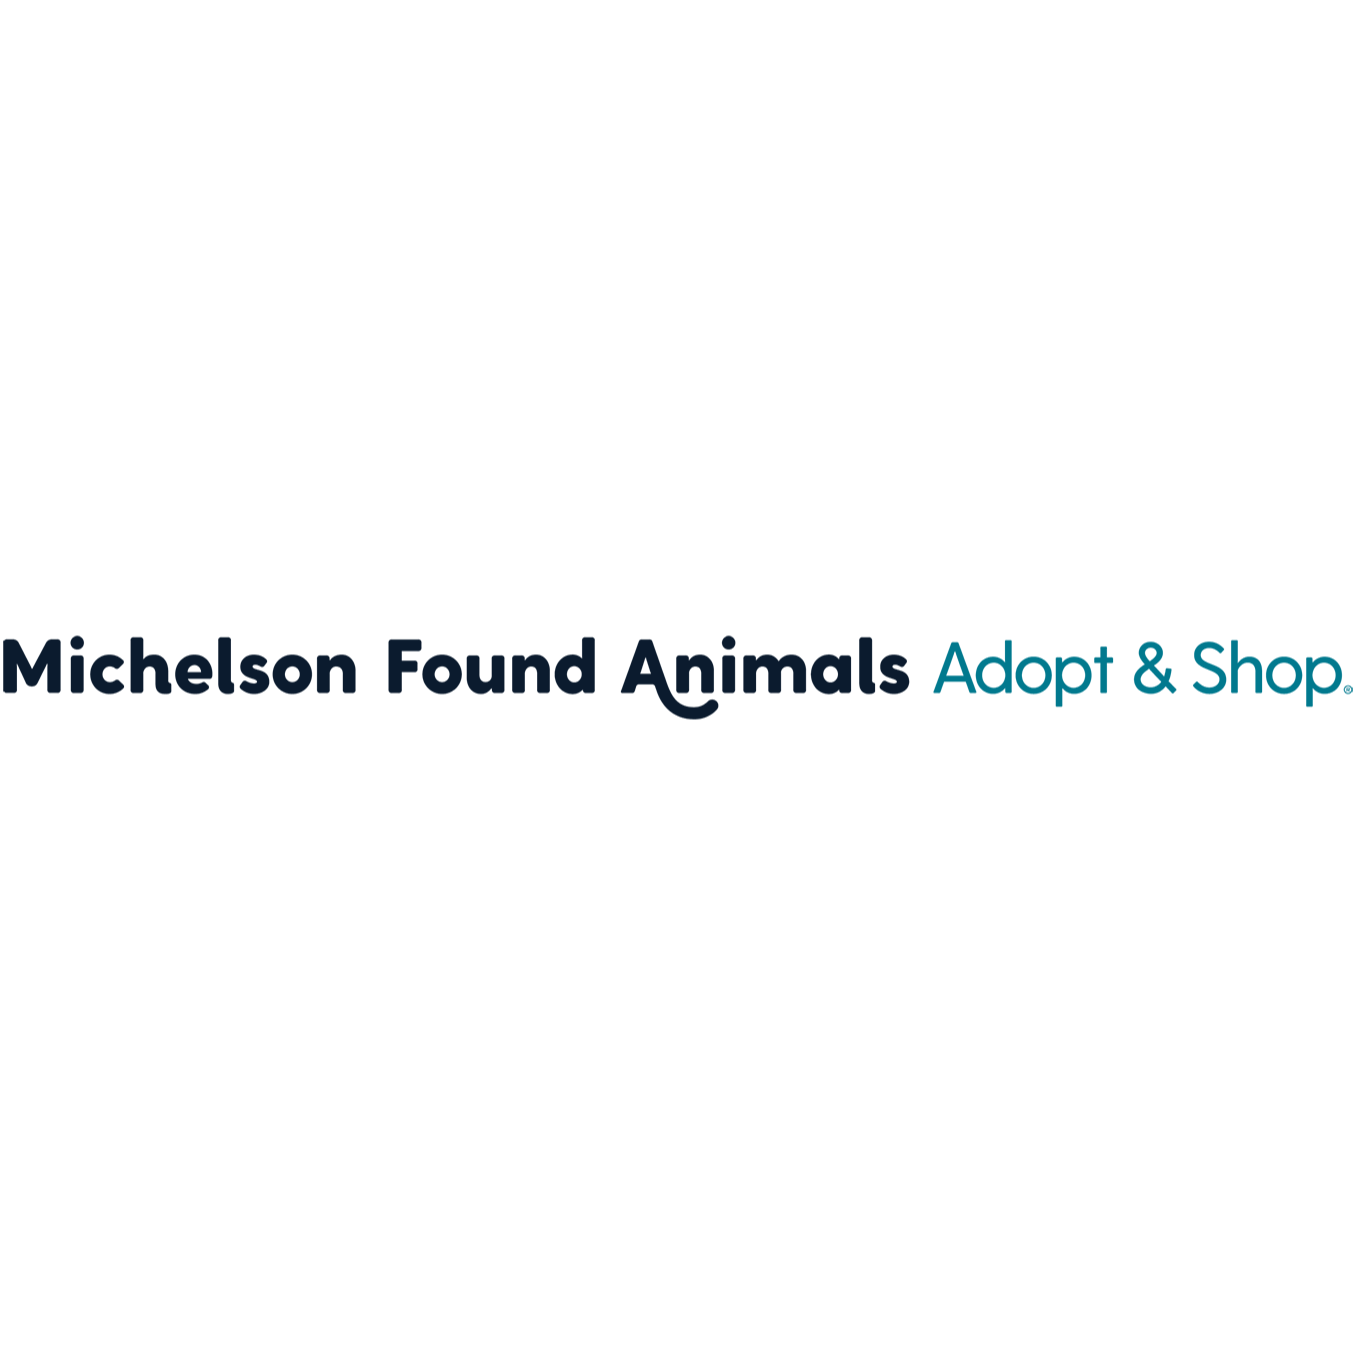 Found Animals Adopt & Shop - Culver City Logo